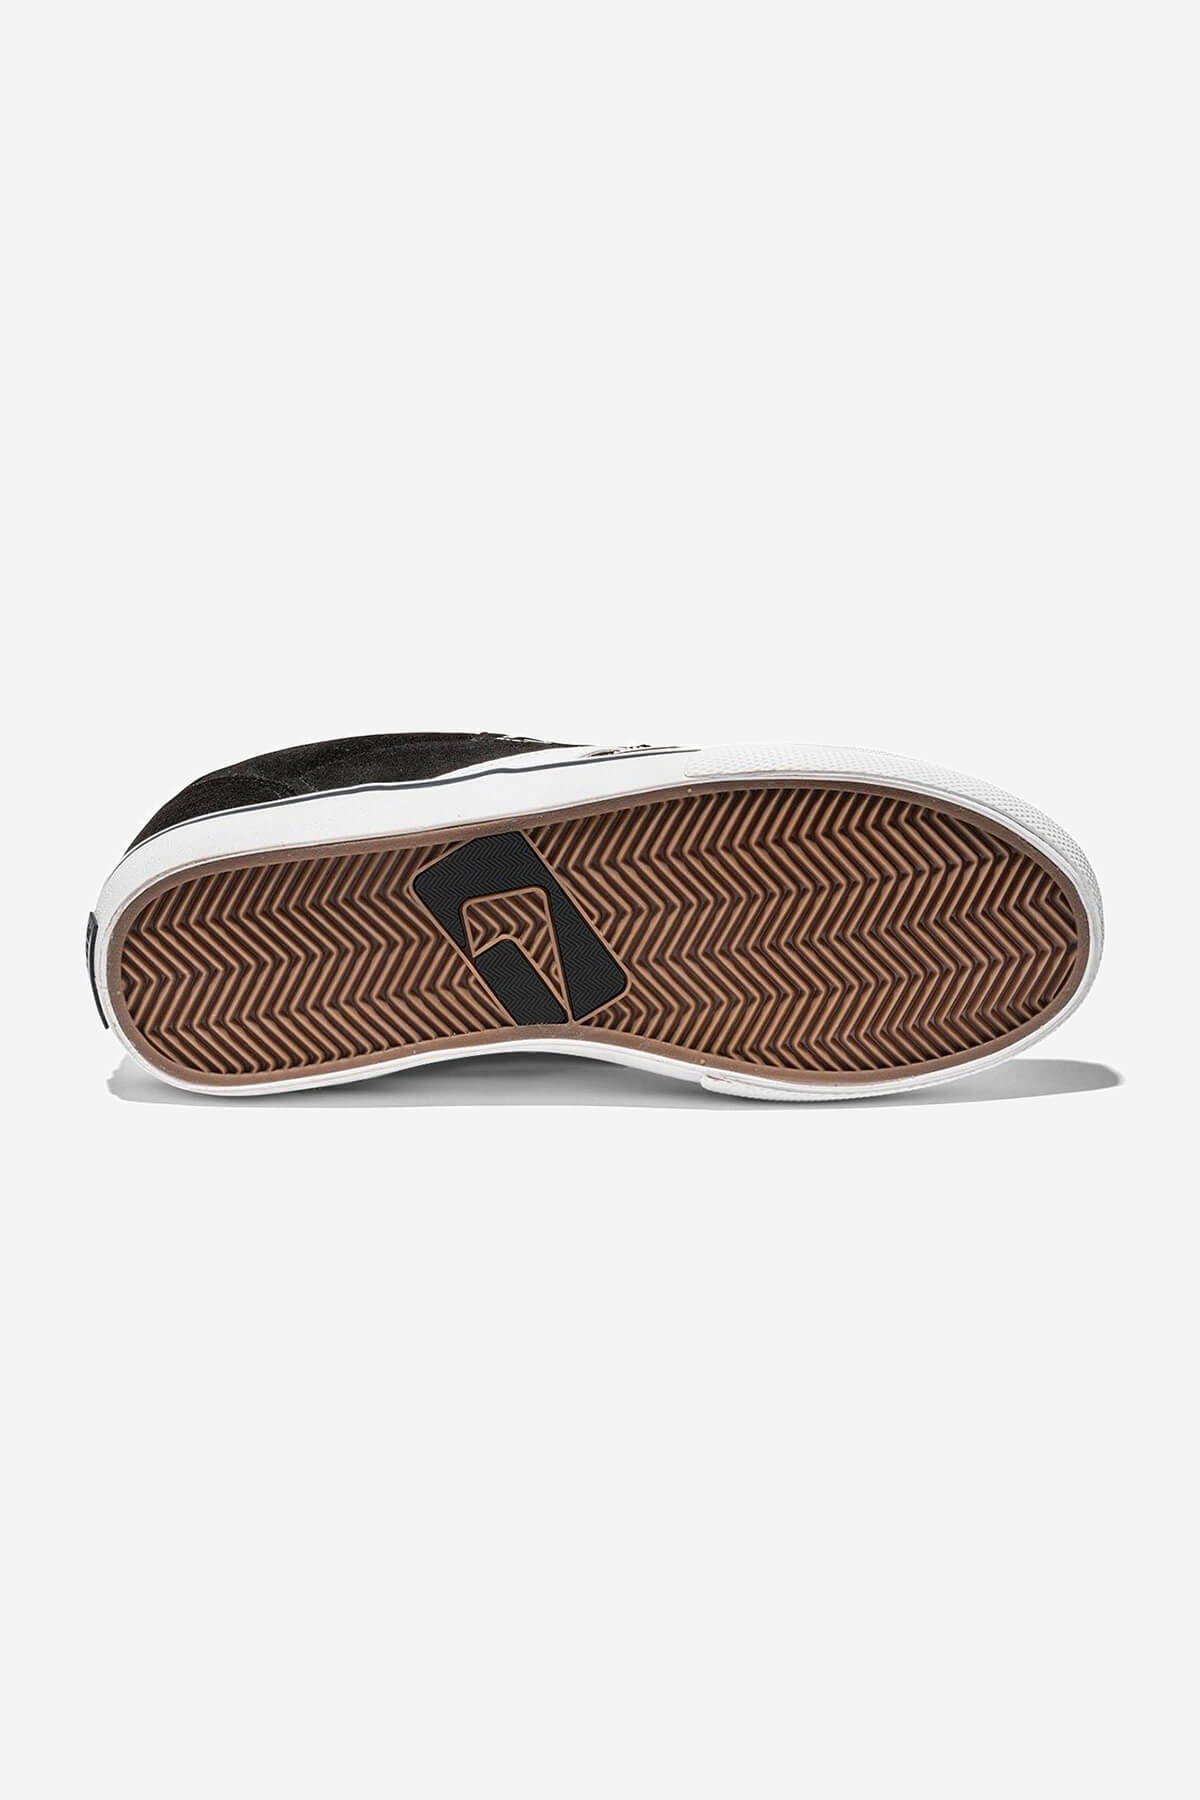 encore-2 nero white skateboard  scarpe